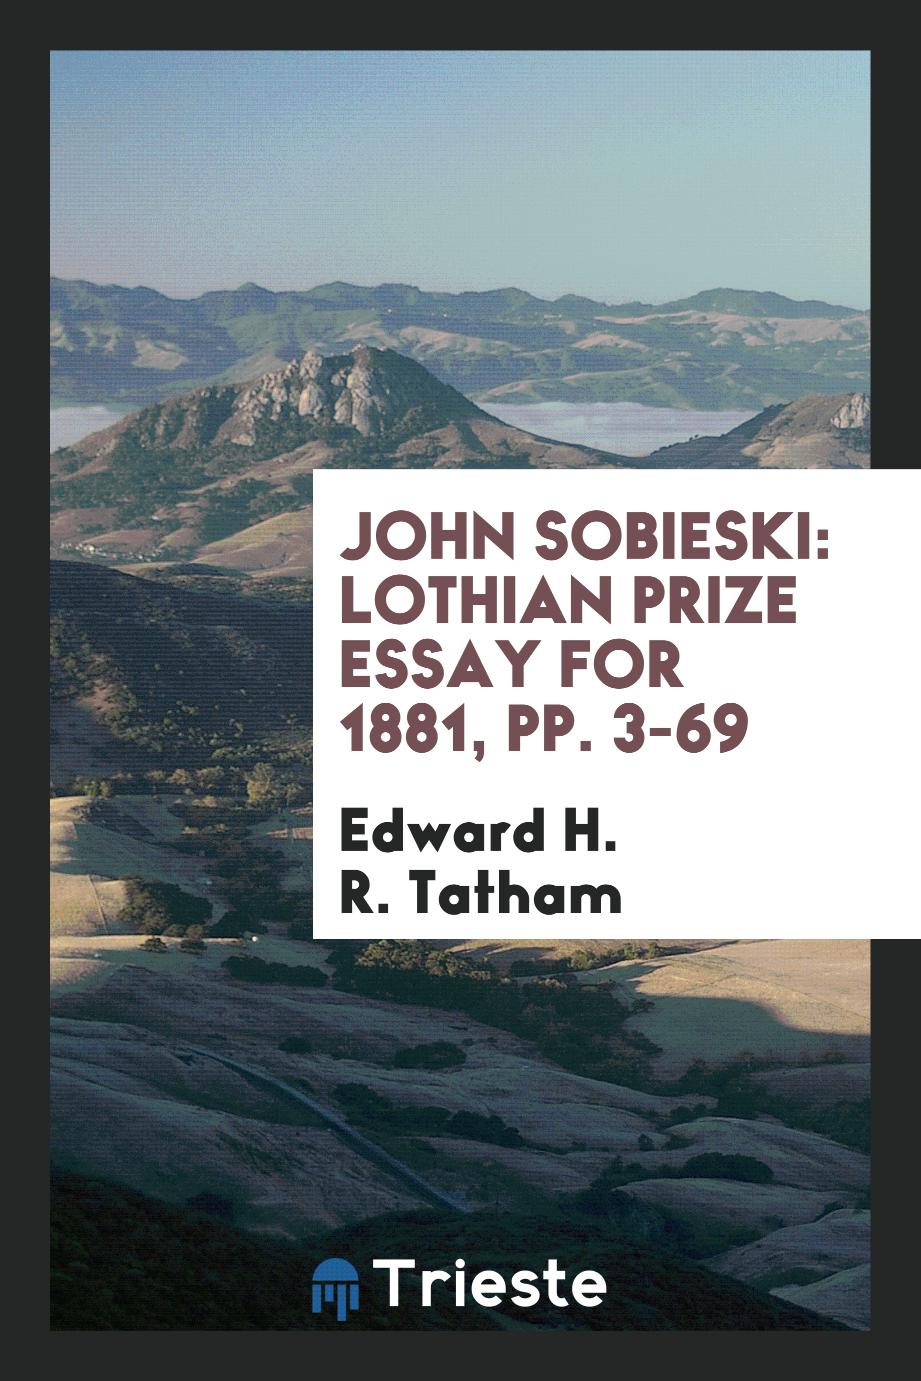 John Sobieski: Lothian Prize Essay for 1881, pp. 3-69